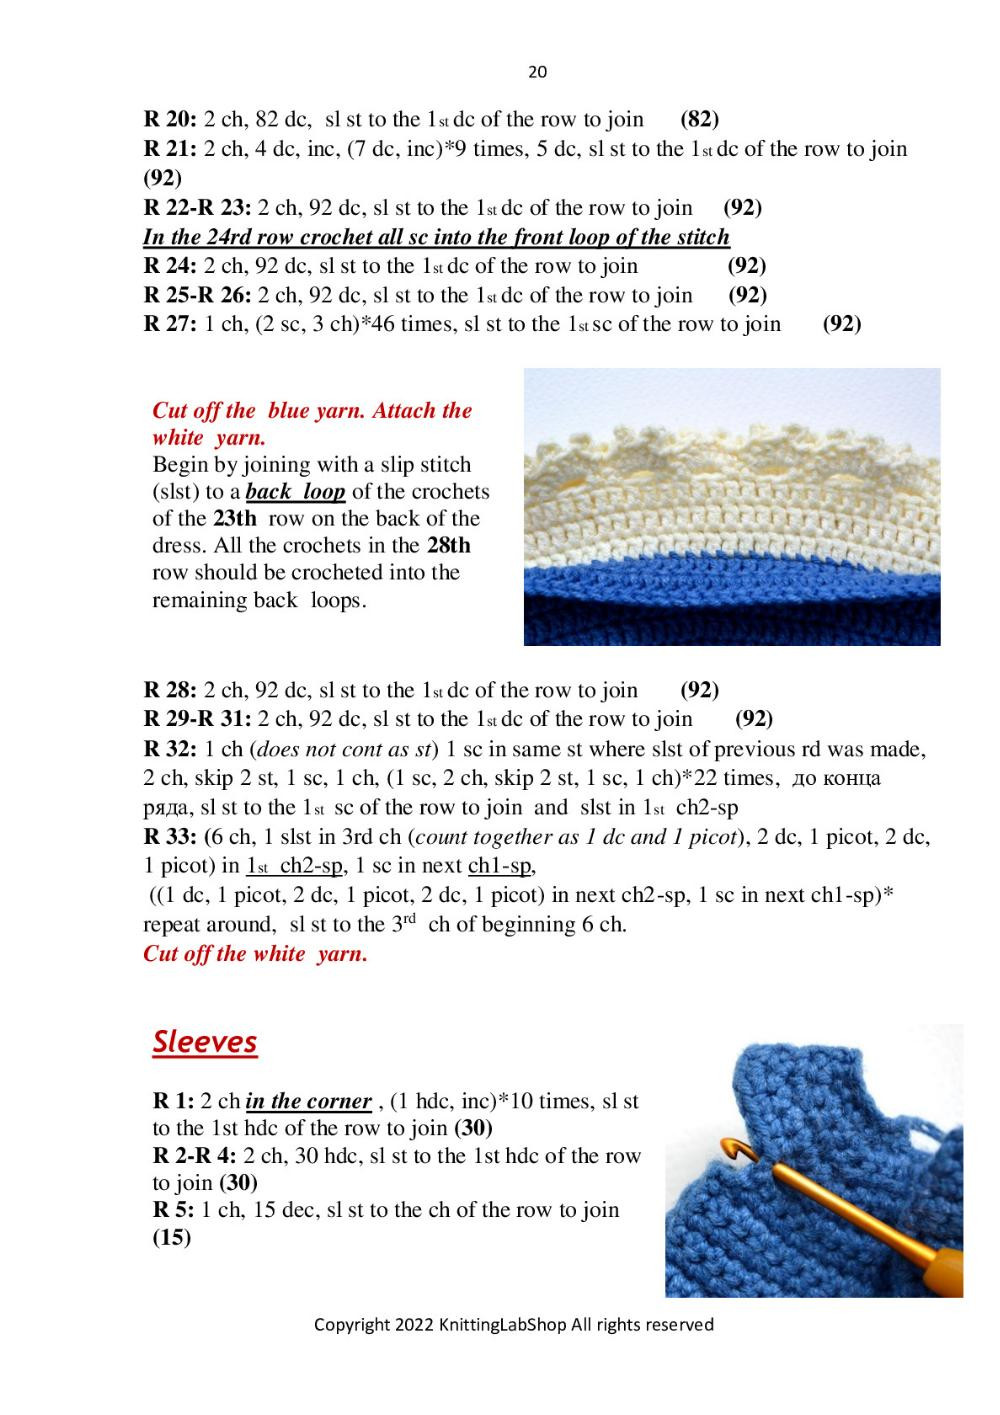 KNITTING LAB PRESENTS DOLL AGNESHKA crochet pattern